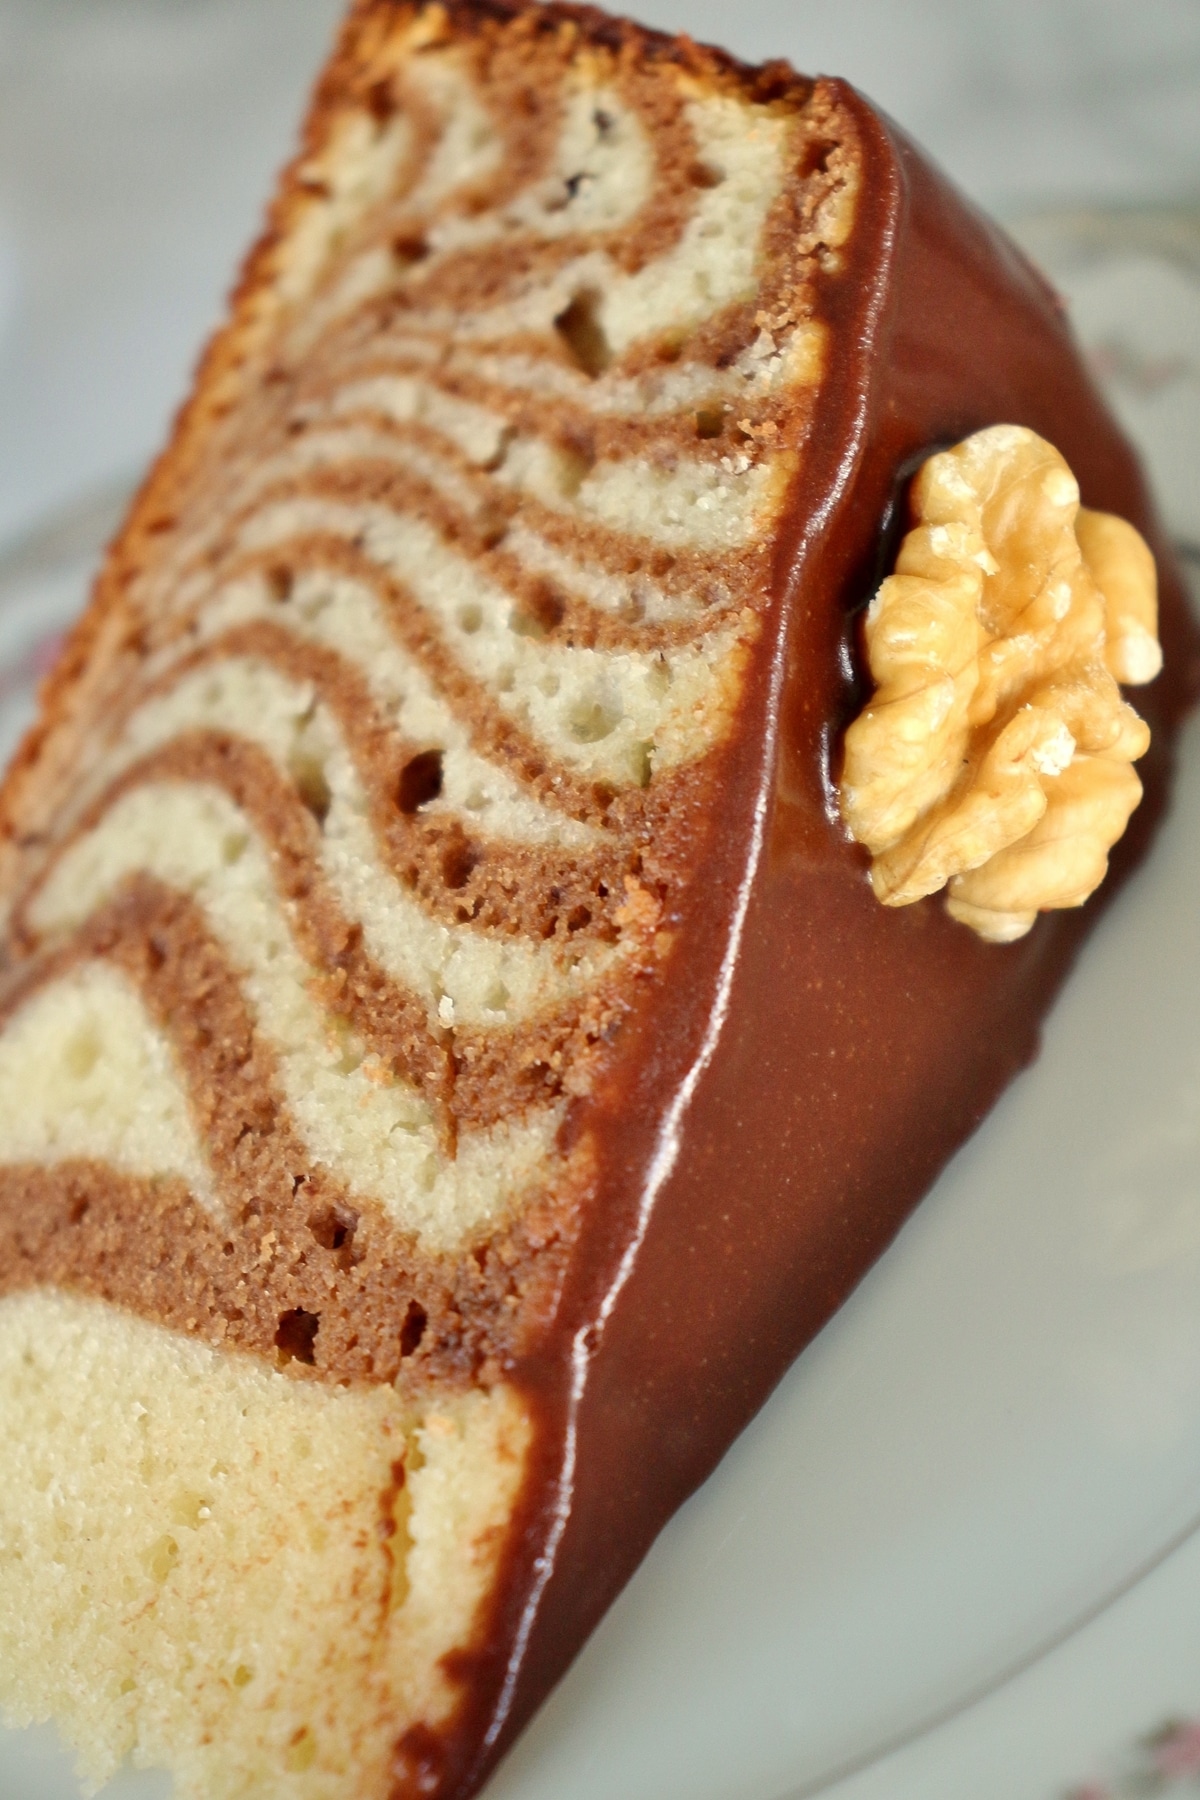 Close up of a slice of zebra cake with chocolate glaze and a walnut garnish